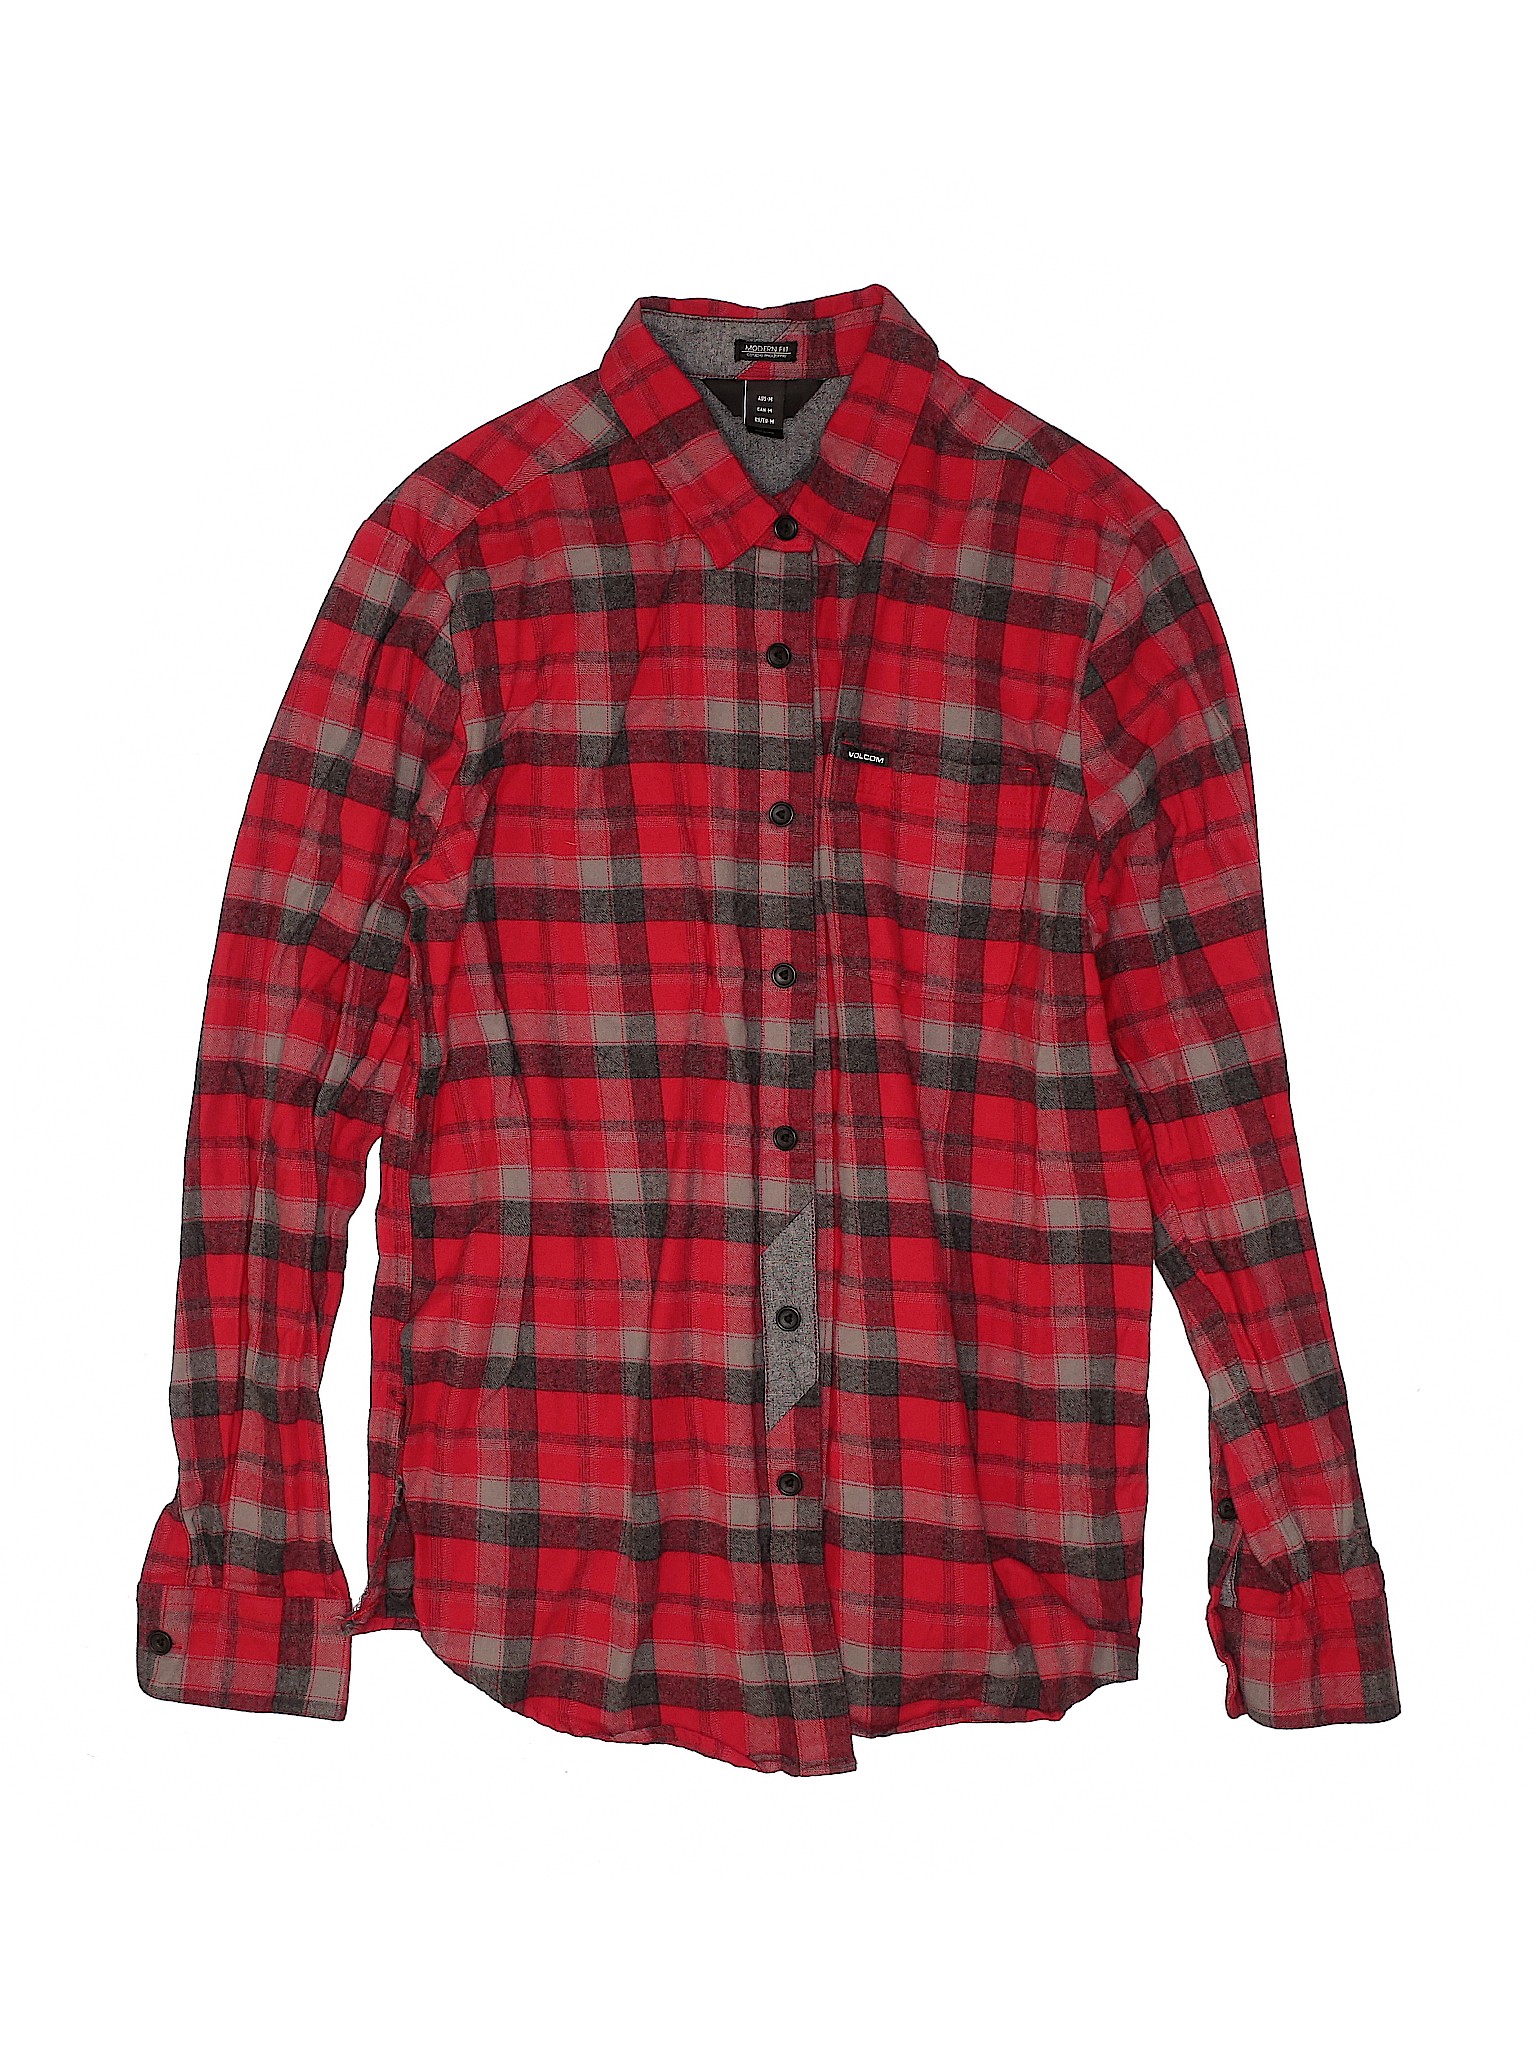 Viacom Boys Red Long Sleeve Button-Down Shirt M Youth | eBay